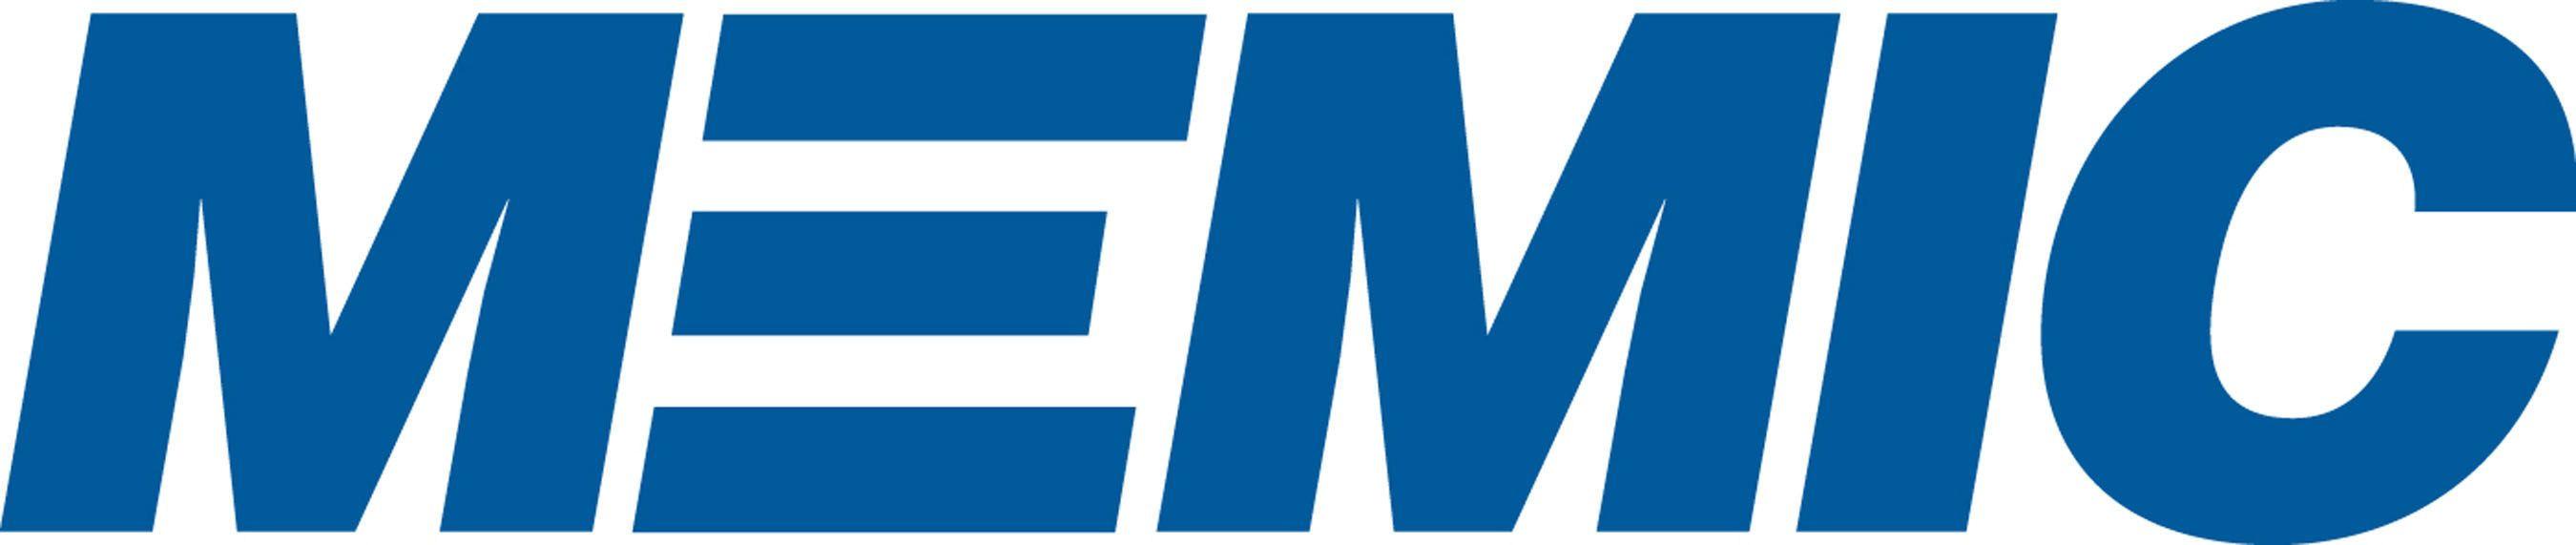 Memic Logo - MEMIC Hire Expands Presence in Virginia and Maryland